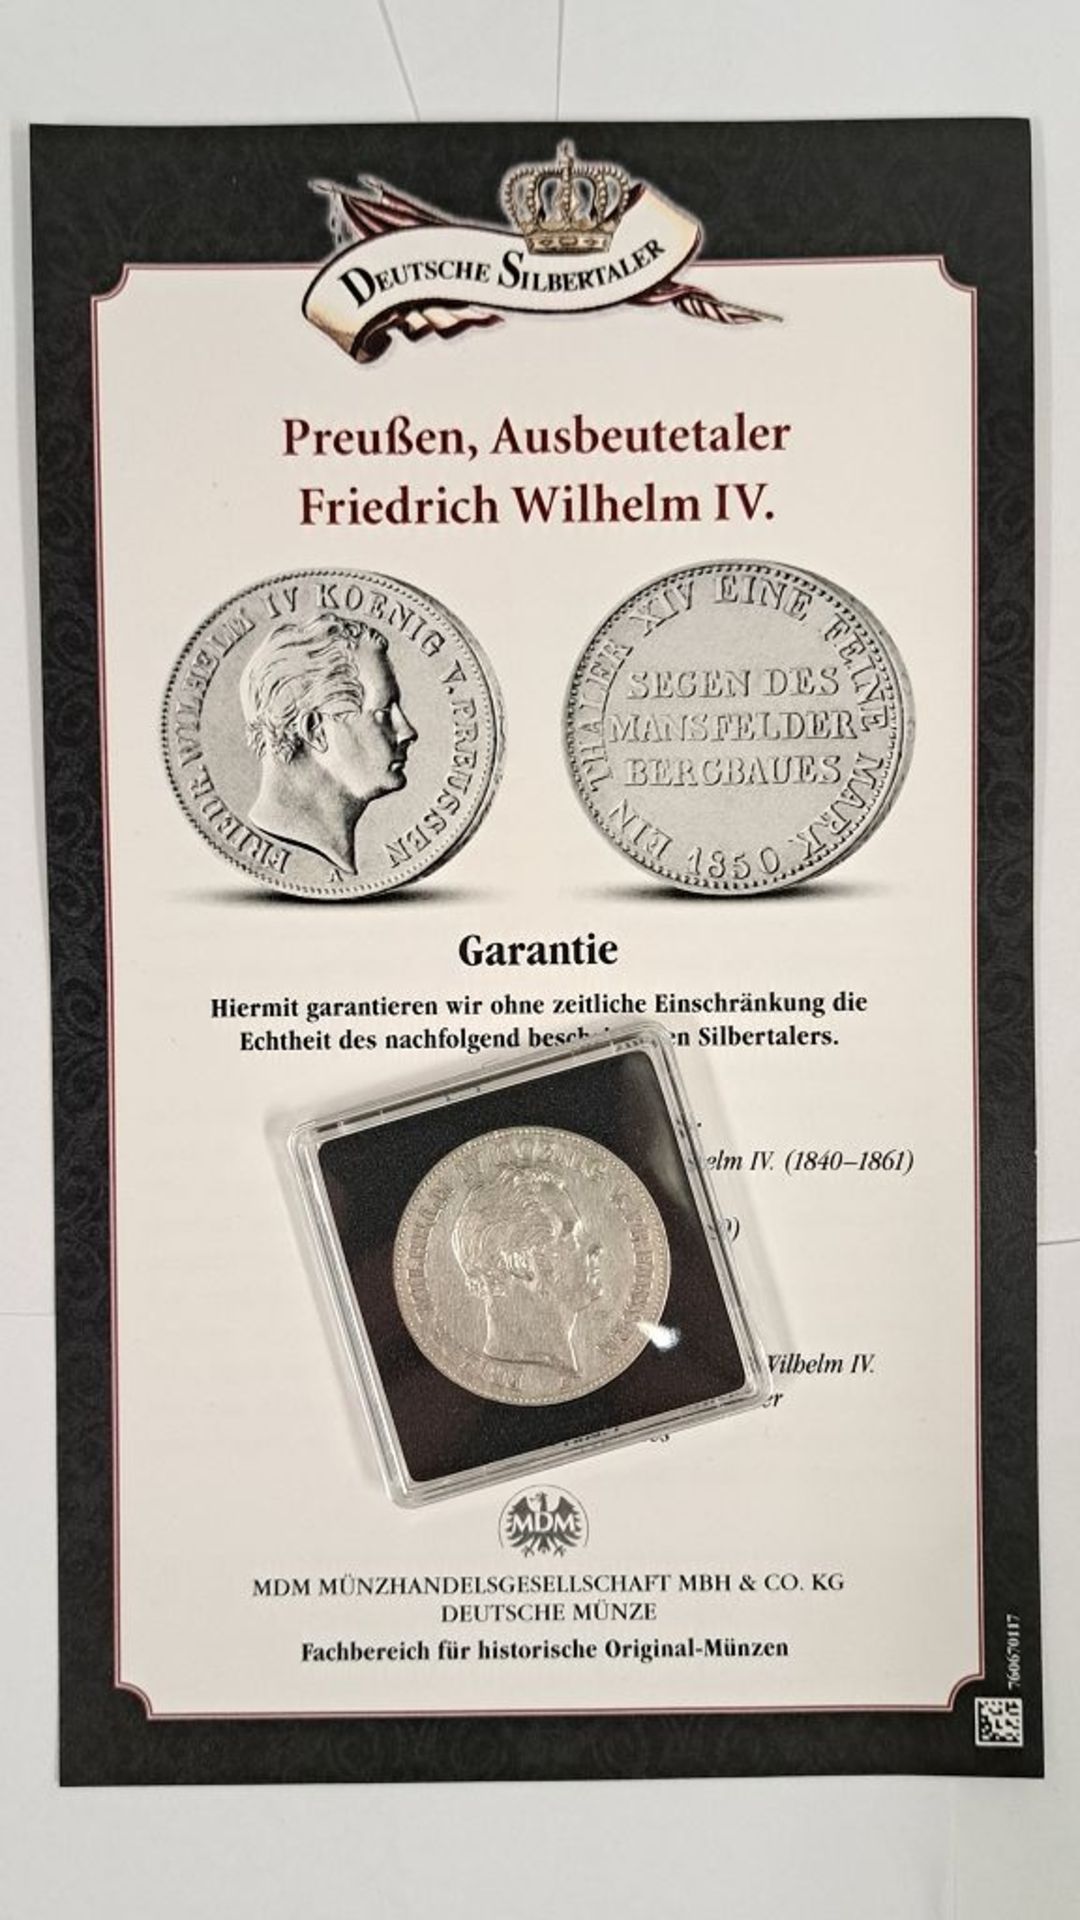 Münze "1 feine Mark" 1842 - 1852